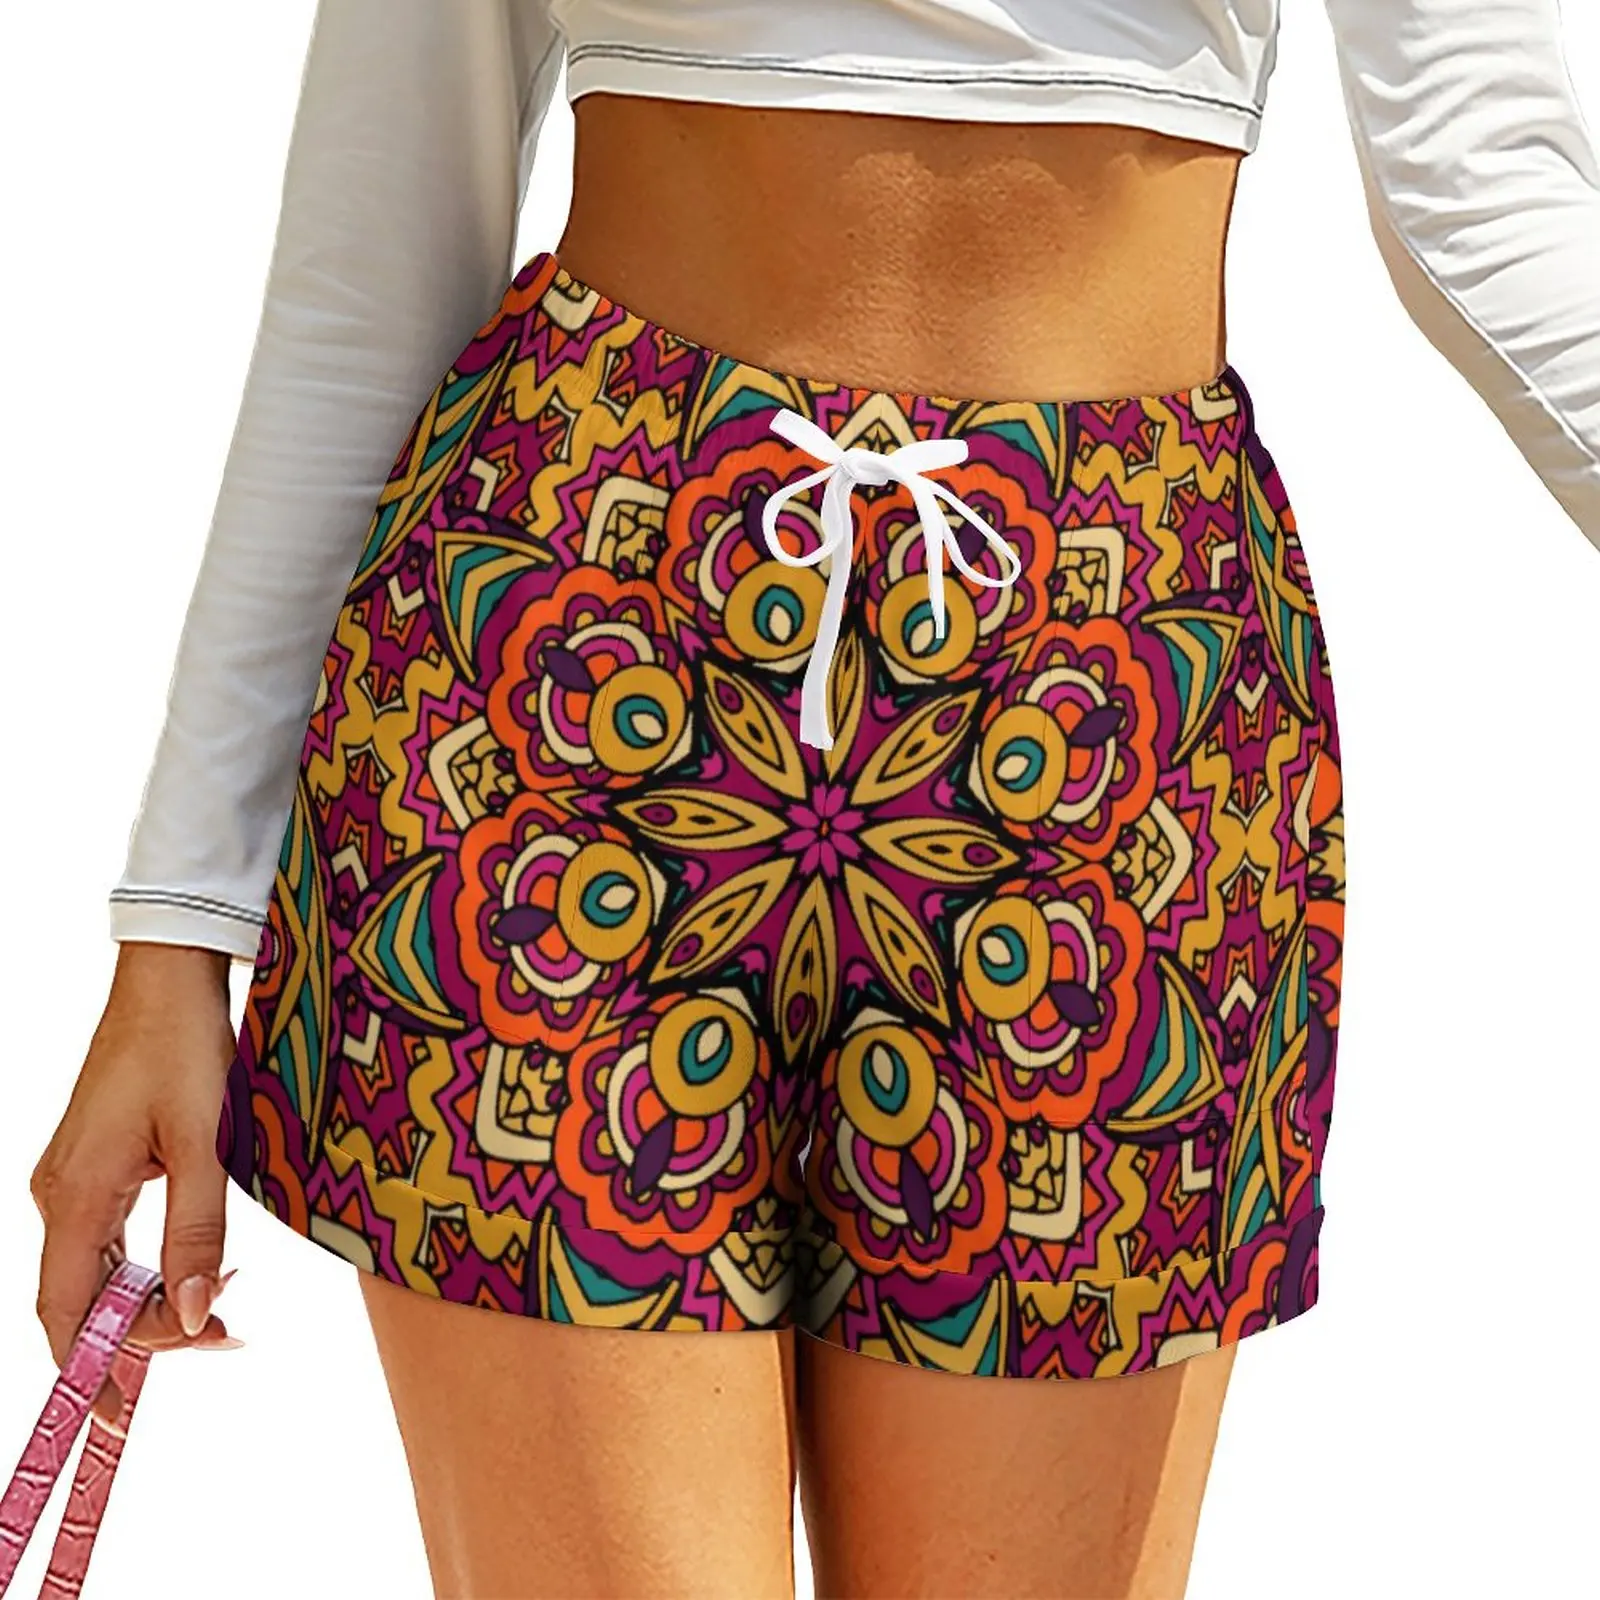 

Ethnic Tribal Print Shorts High Waist Vintage Floral Graphic Shorts Pockets Summer Sport Oversize Short Pants Casual Bottoms